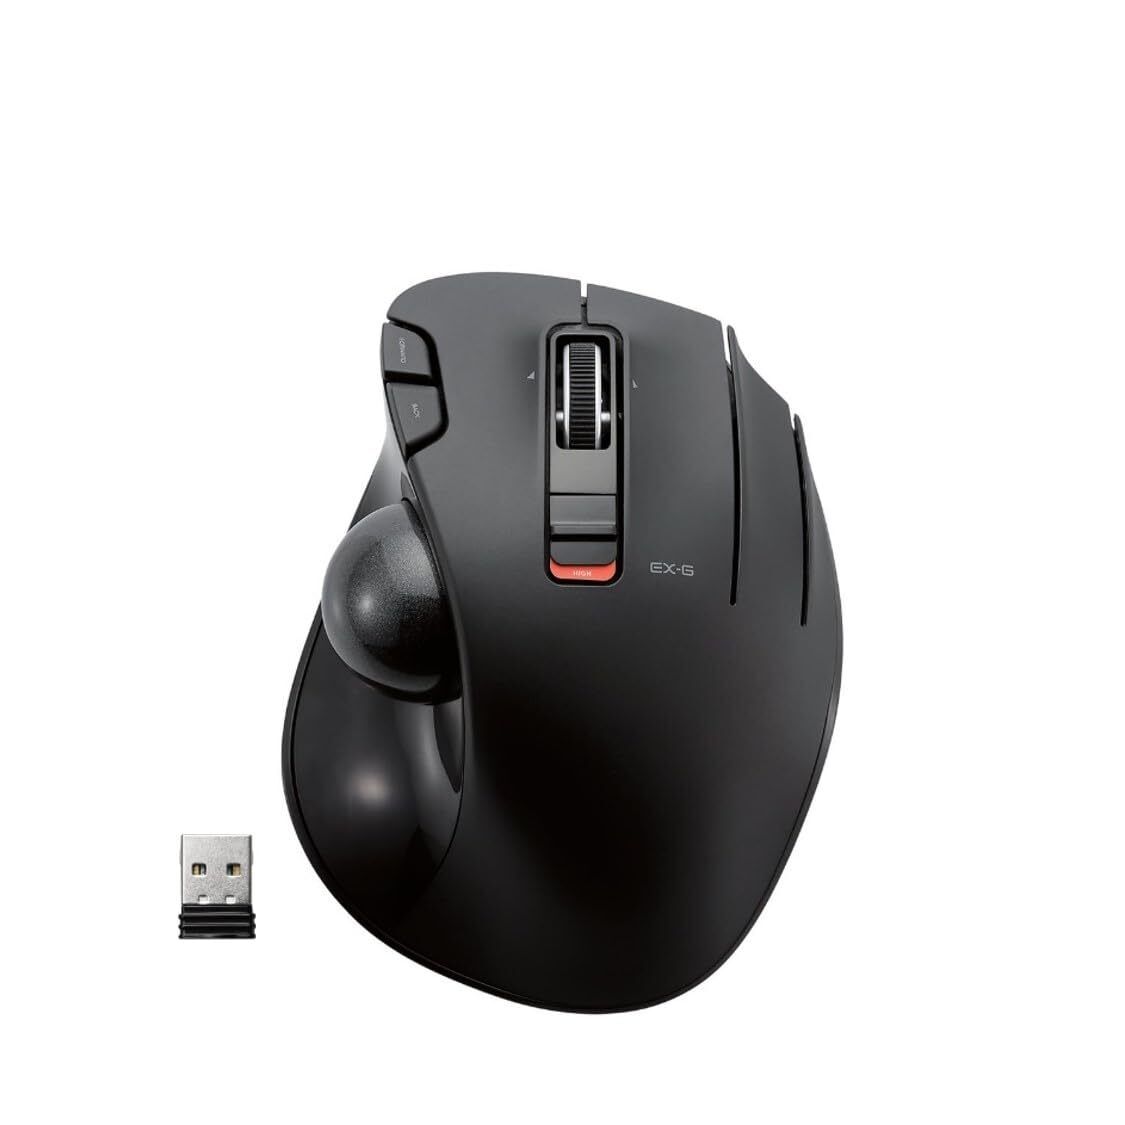 ELECOM EX-G Trackball Mouse 2.4GHz USB Wireless Ergonomic Design Thumb Contro...